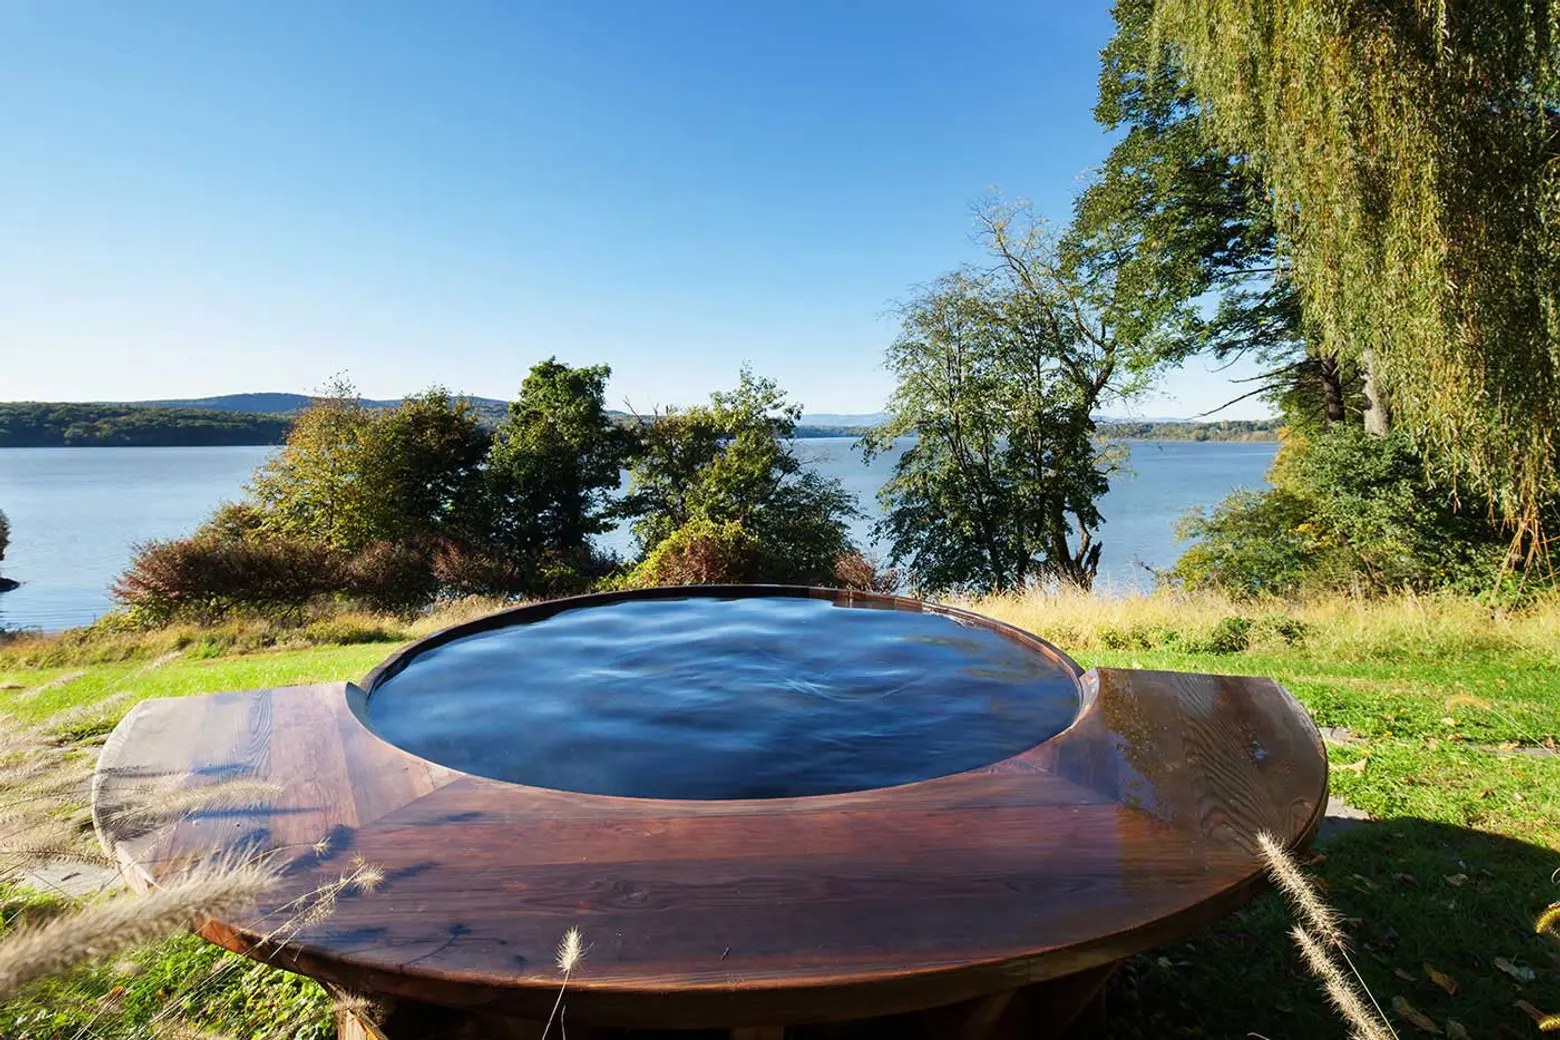 Andre Tchelistcheff, Hudson Valley Spa, wooden sauna, Hudson River views, burnt-orange cedar planks, warm cozy space